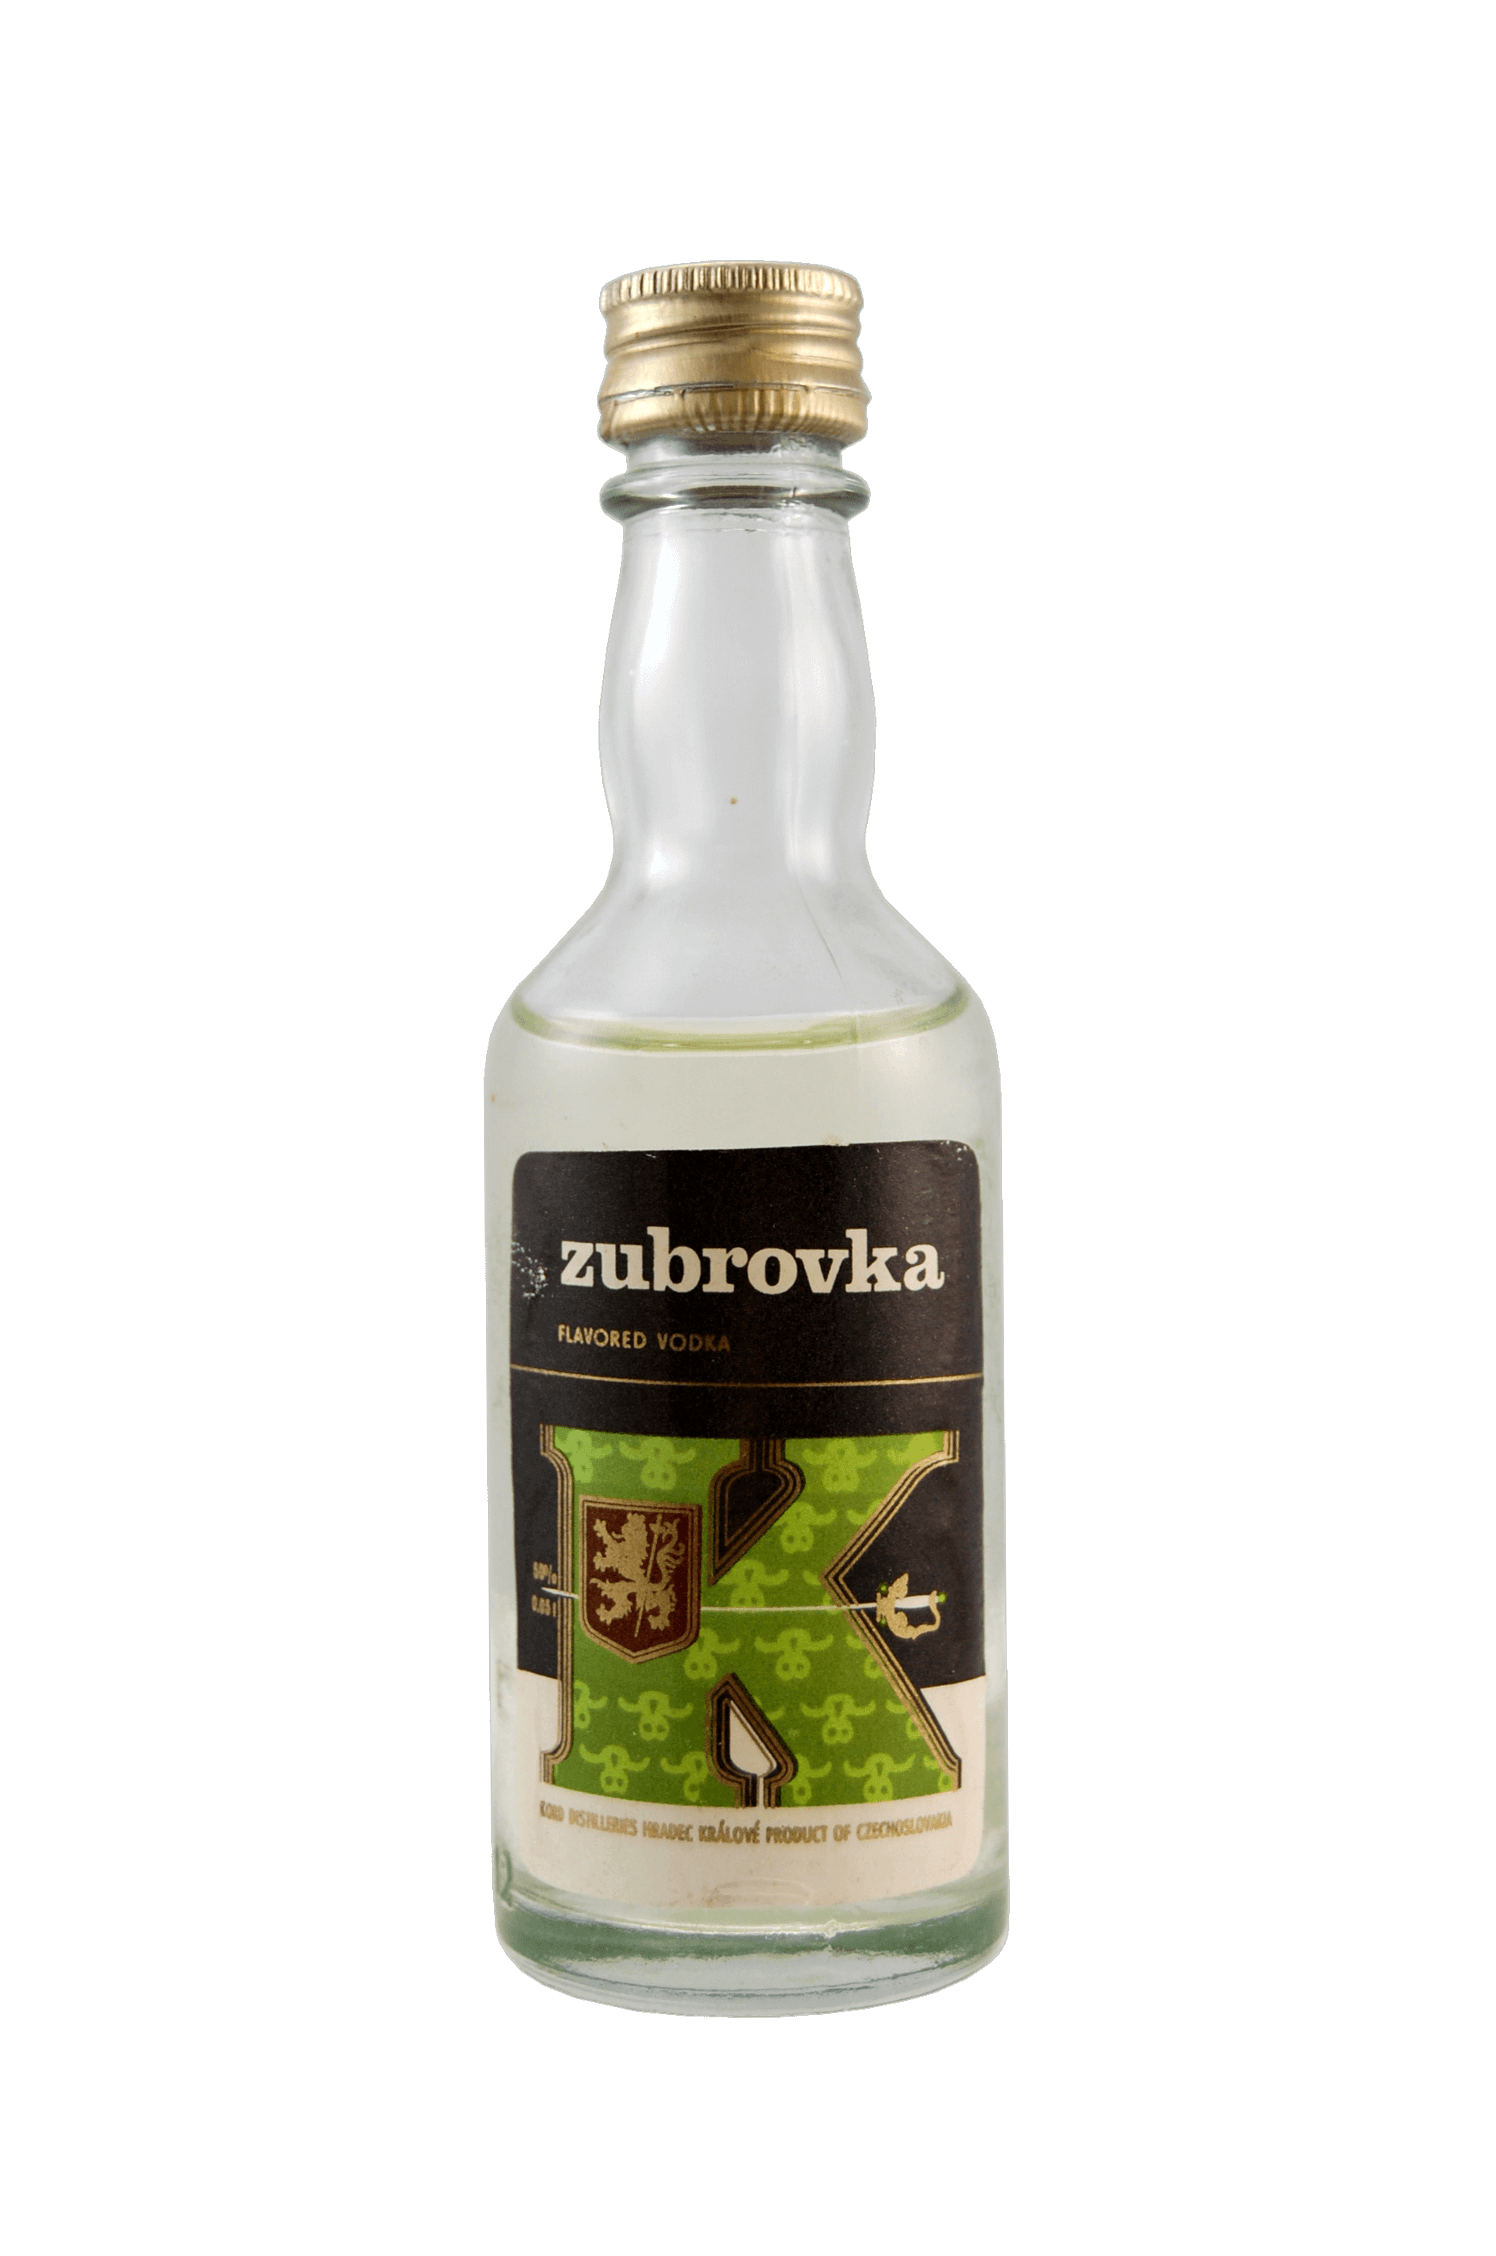 Kord Vodka Zubrovka